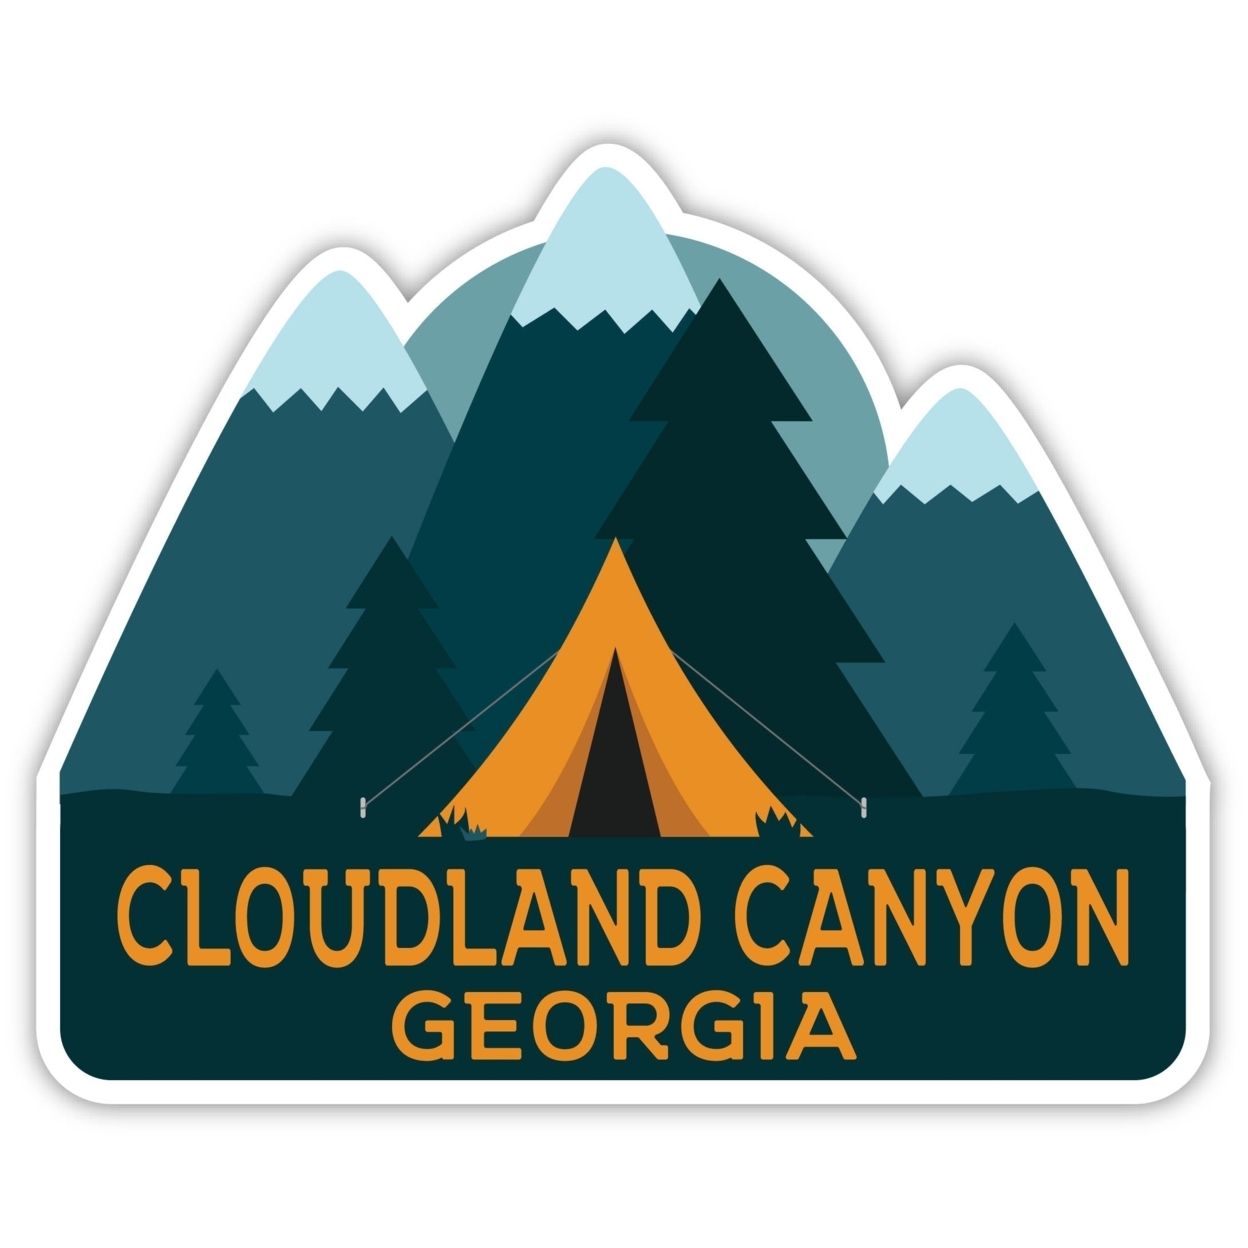 Cloudland Canyon Georgia Souvenir Decorative Stickers (Choose Theme And Size) - Single Unit, 8-Inch, Tent